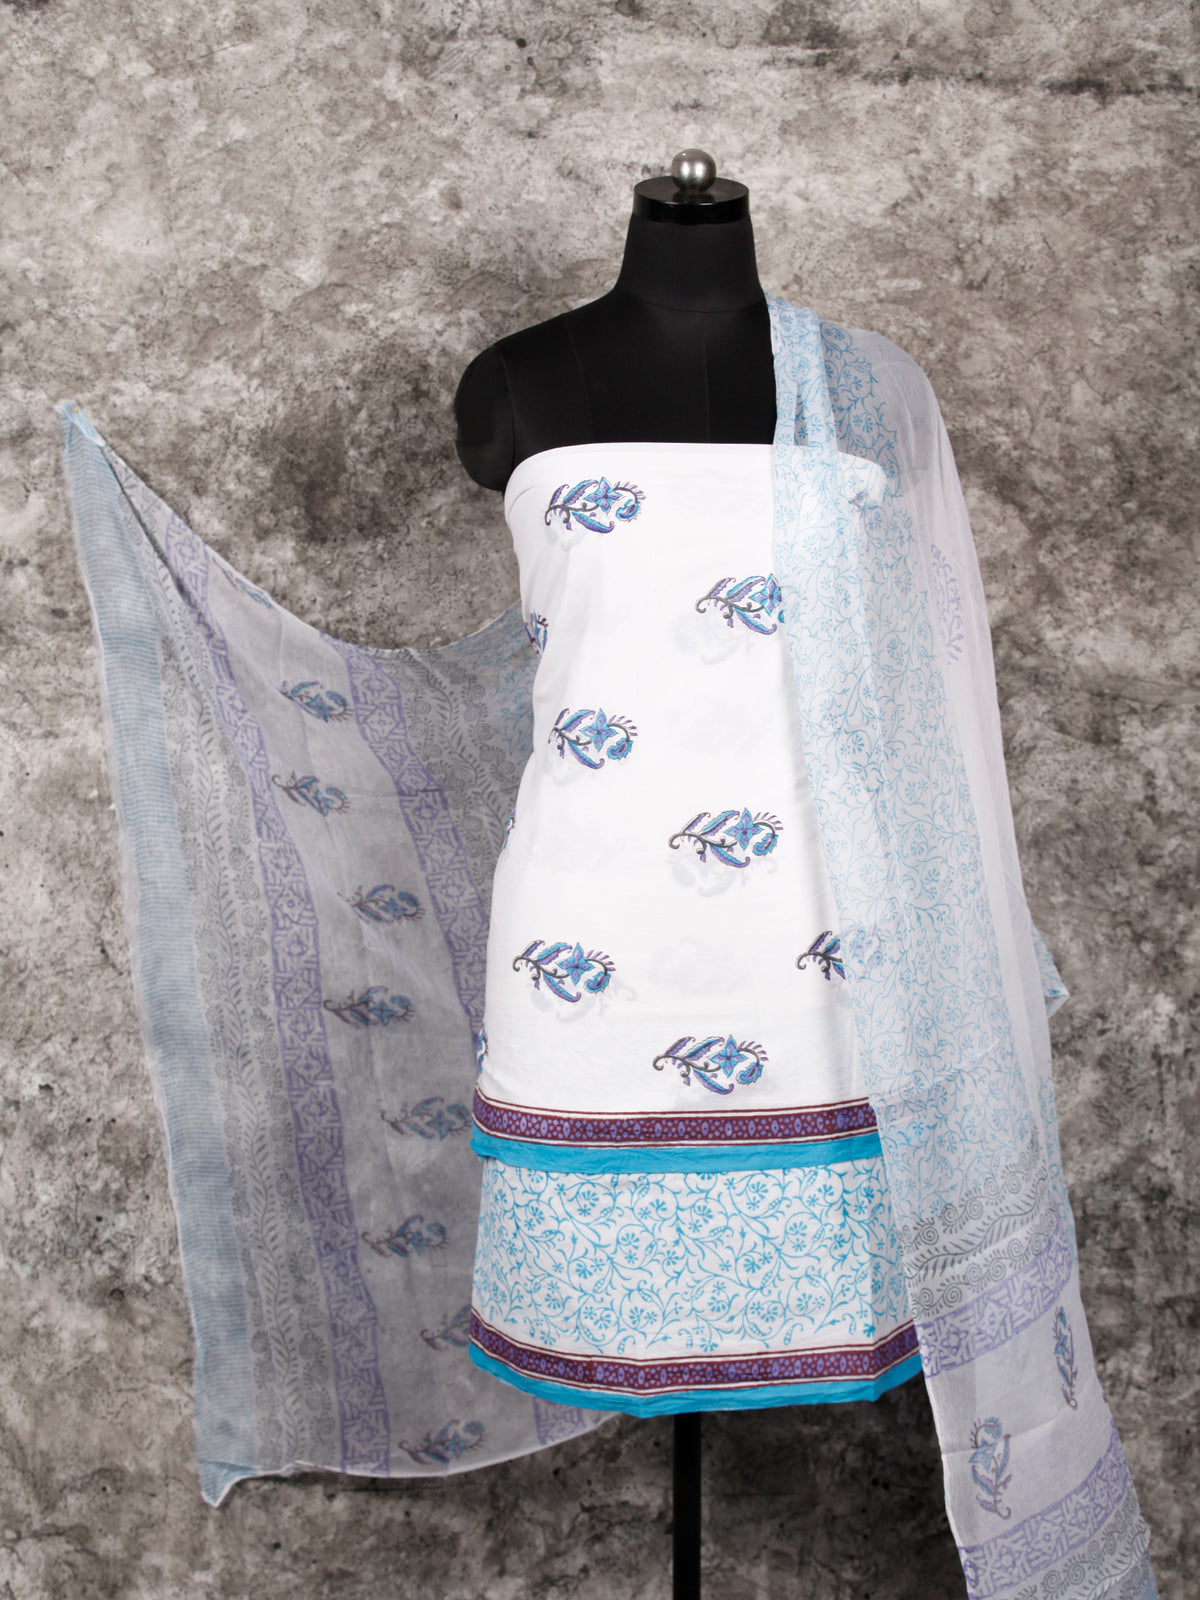 White Blue Purple Hand Block Printed Cotton Suit-Salwar Fabric With Chiffon Dupatta (Set of 3) - SU01HB372